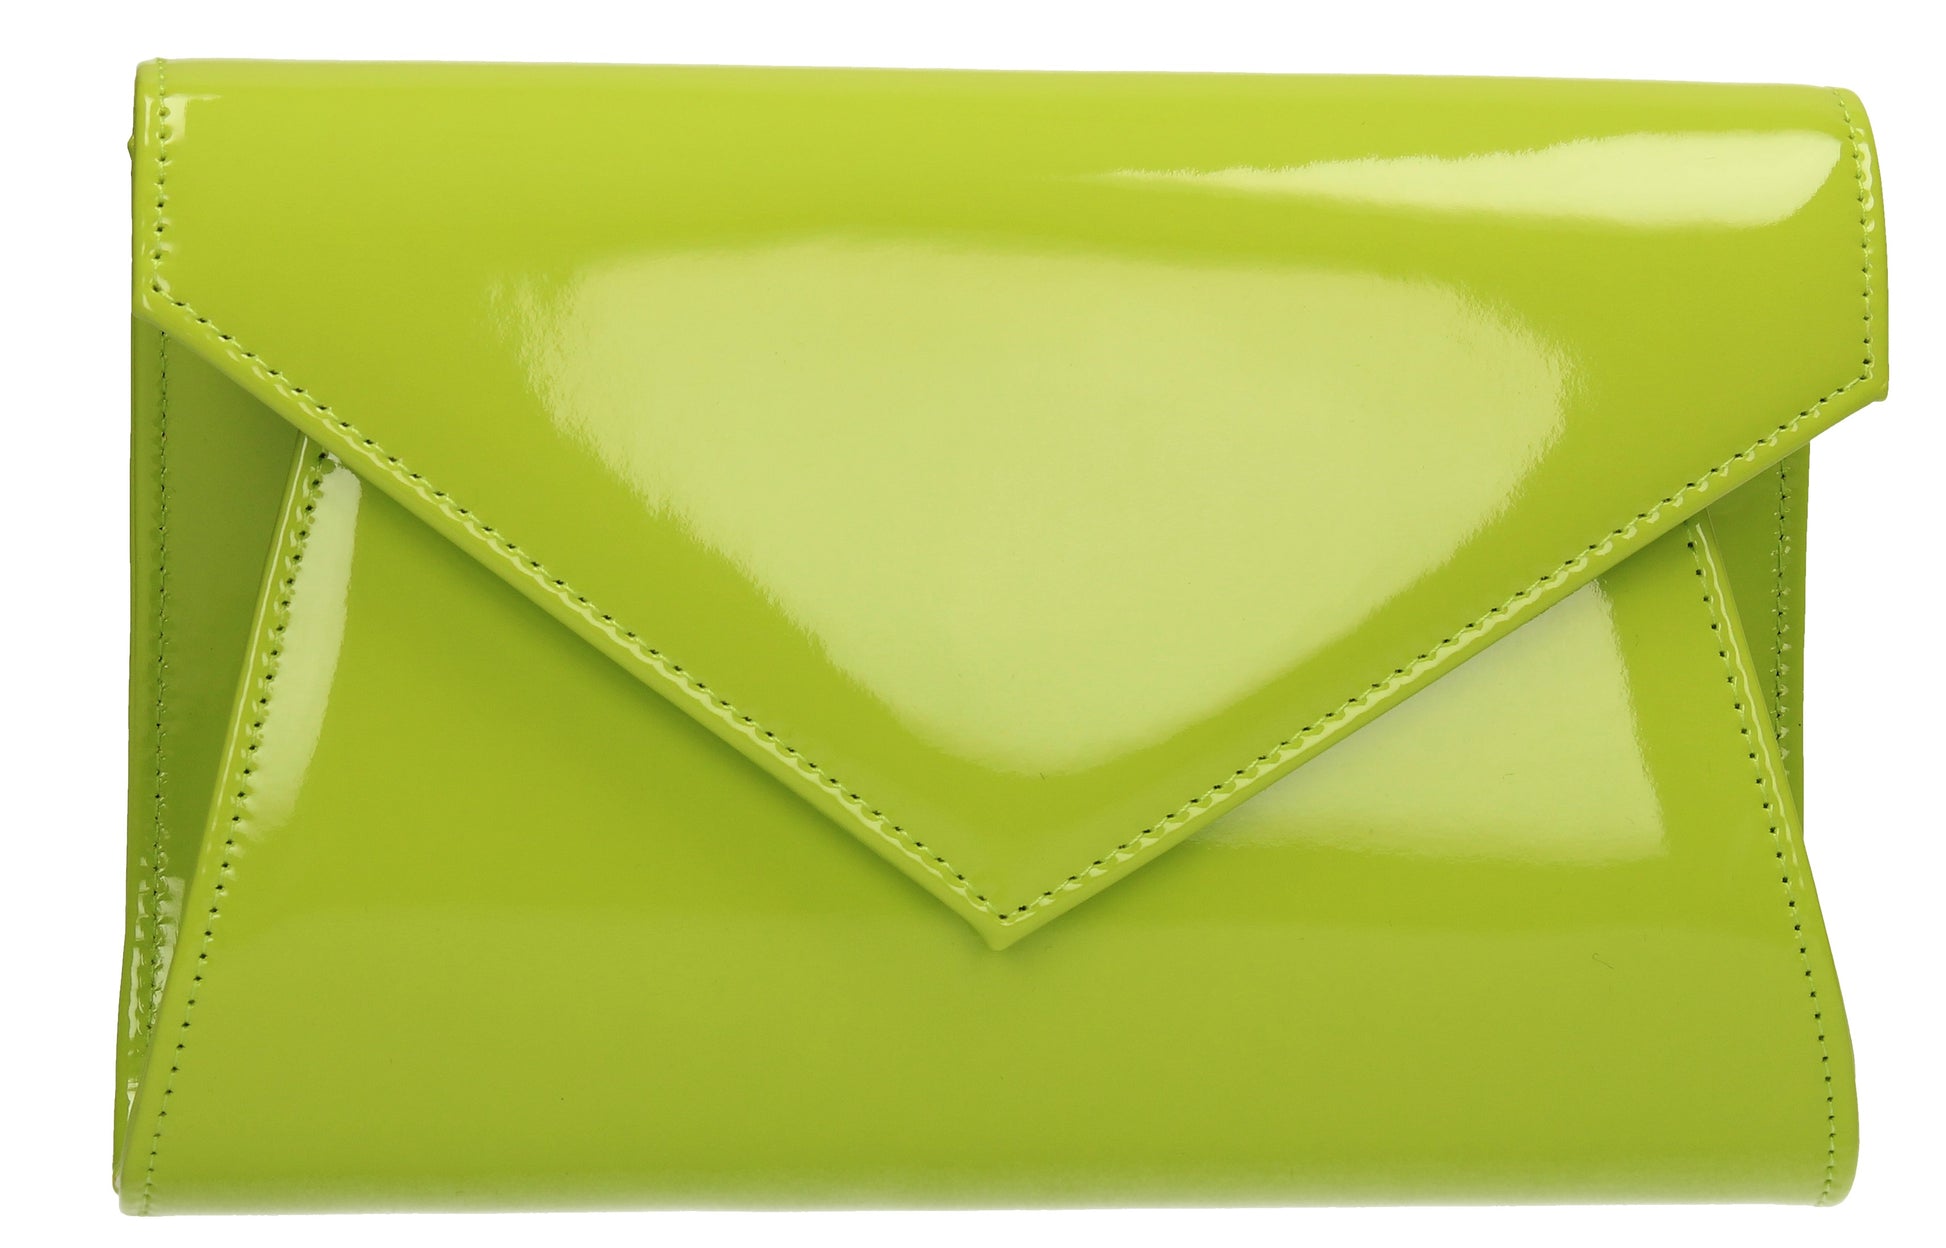 SWANKYSWANS Chrissy Envelope Clutch Bag Green Cute Cheap Clutch Bag For Weddings School and Work